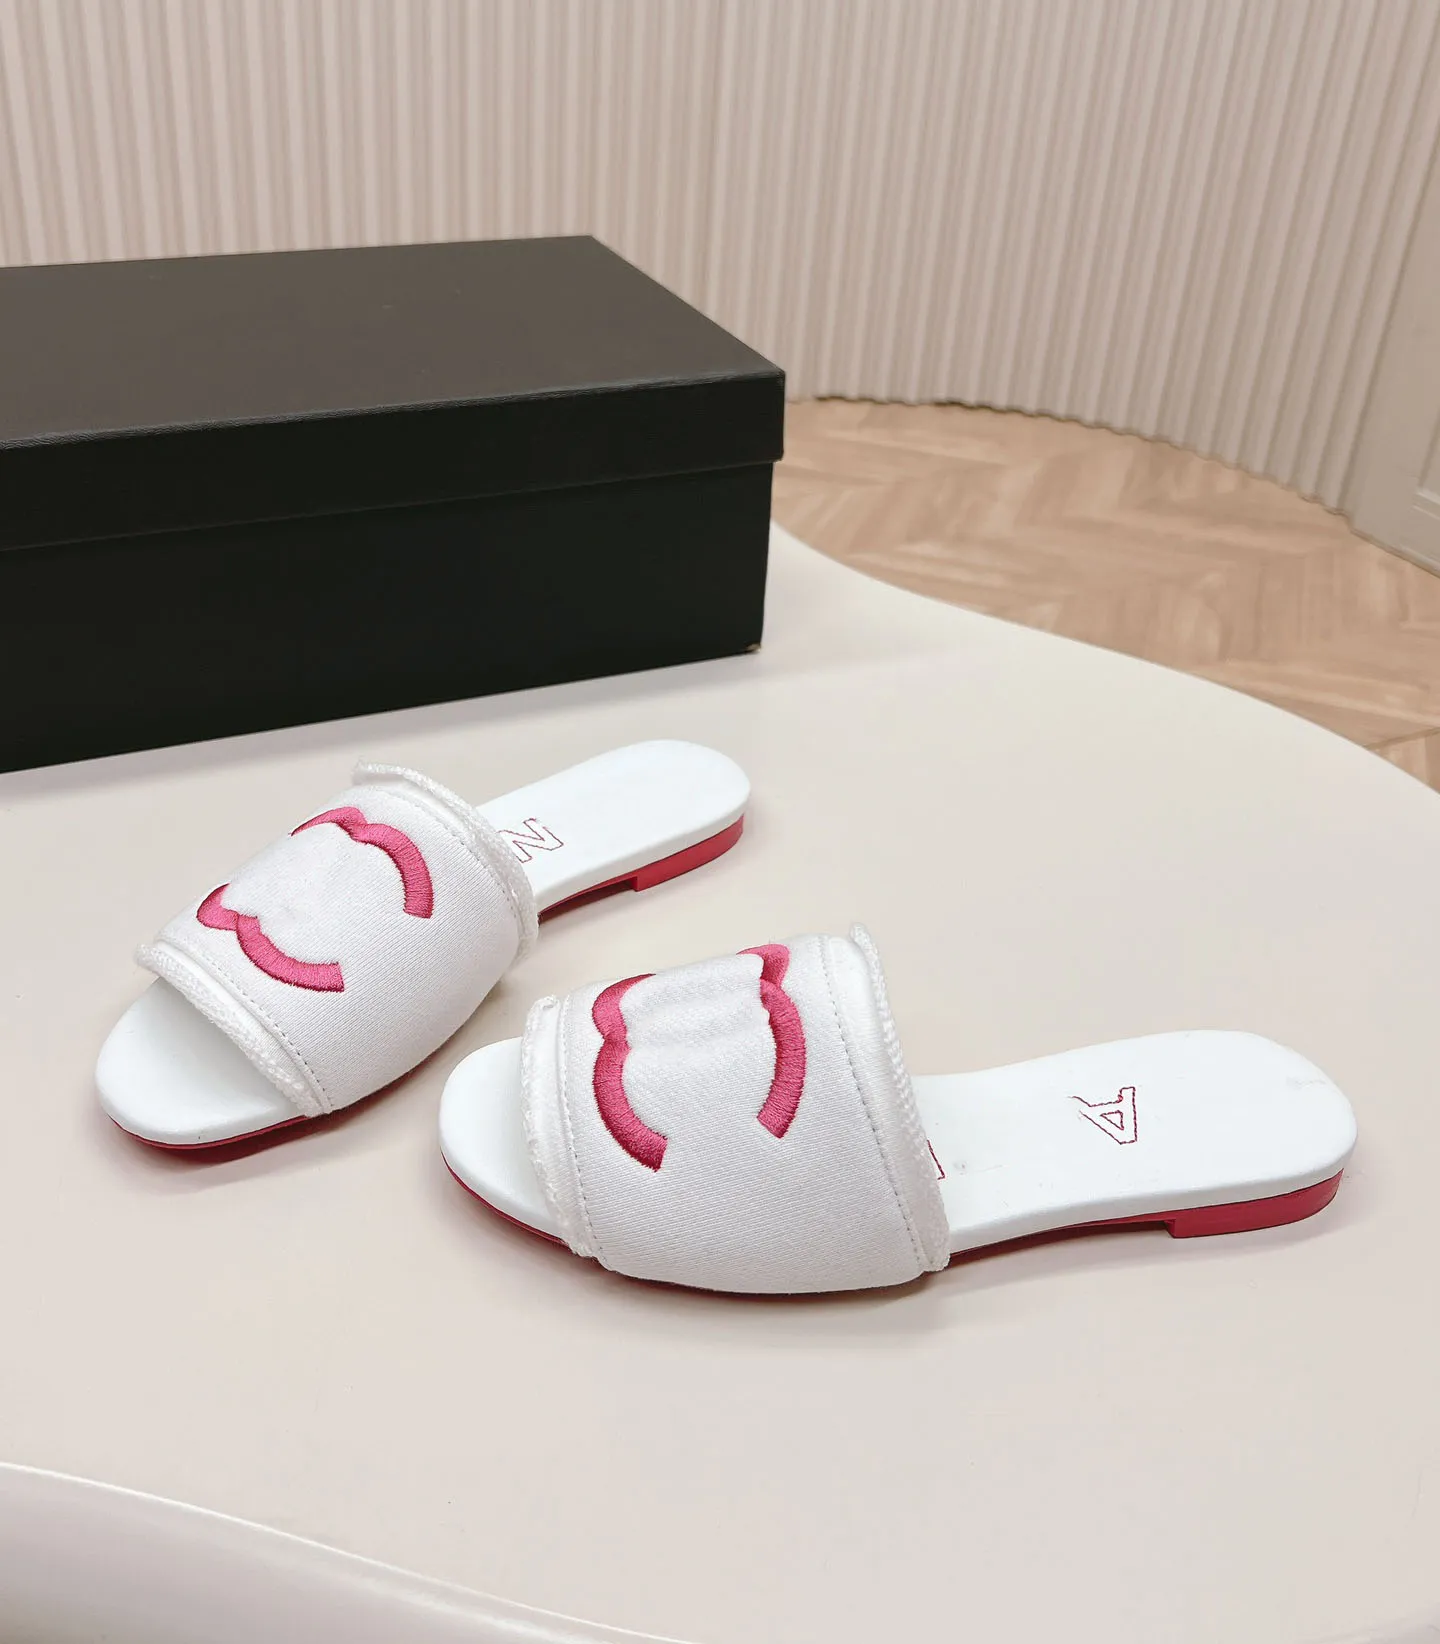 Luxusdesignerin Chanells Sandalen hochwertige C Mules Mode Heels Sandal Women Heel Slipper Beach Neueste Styles Schuhe 2453